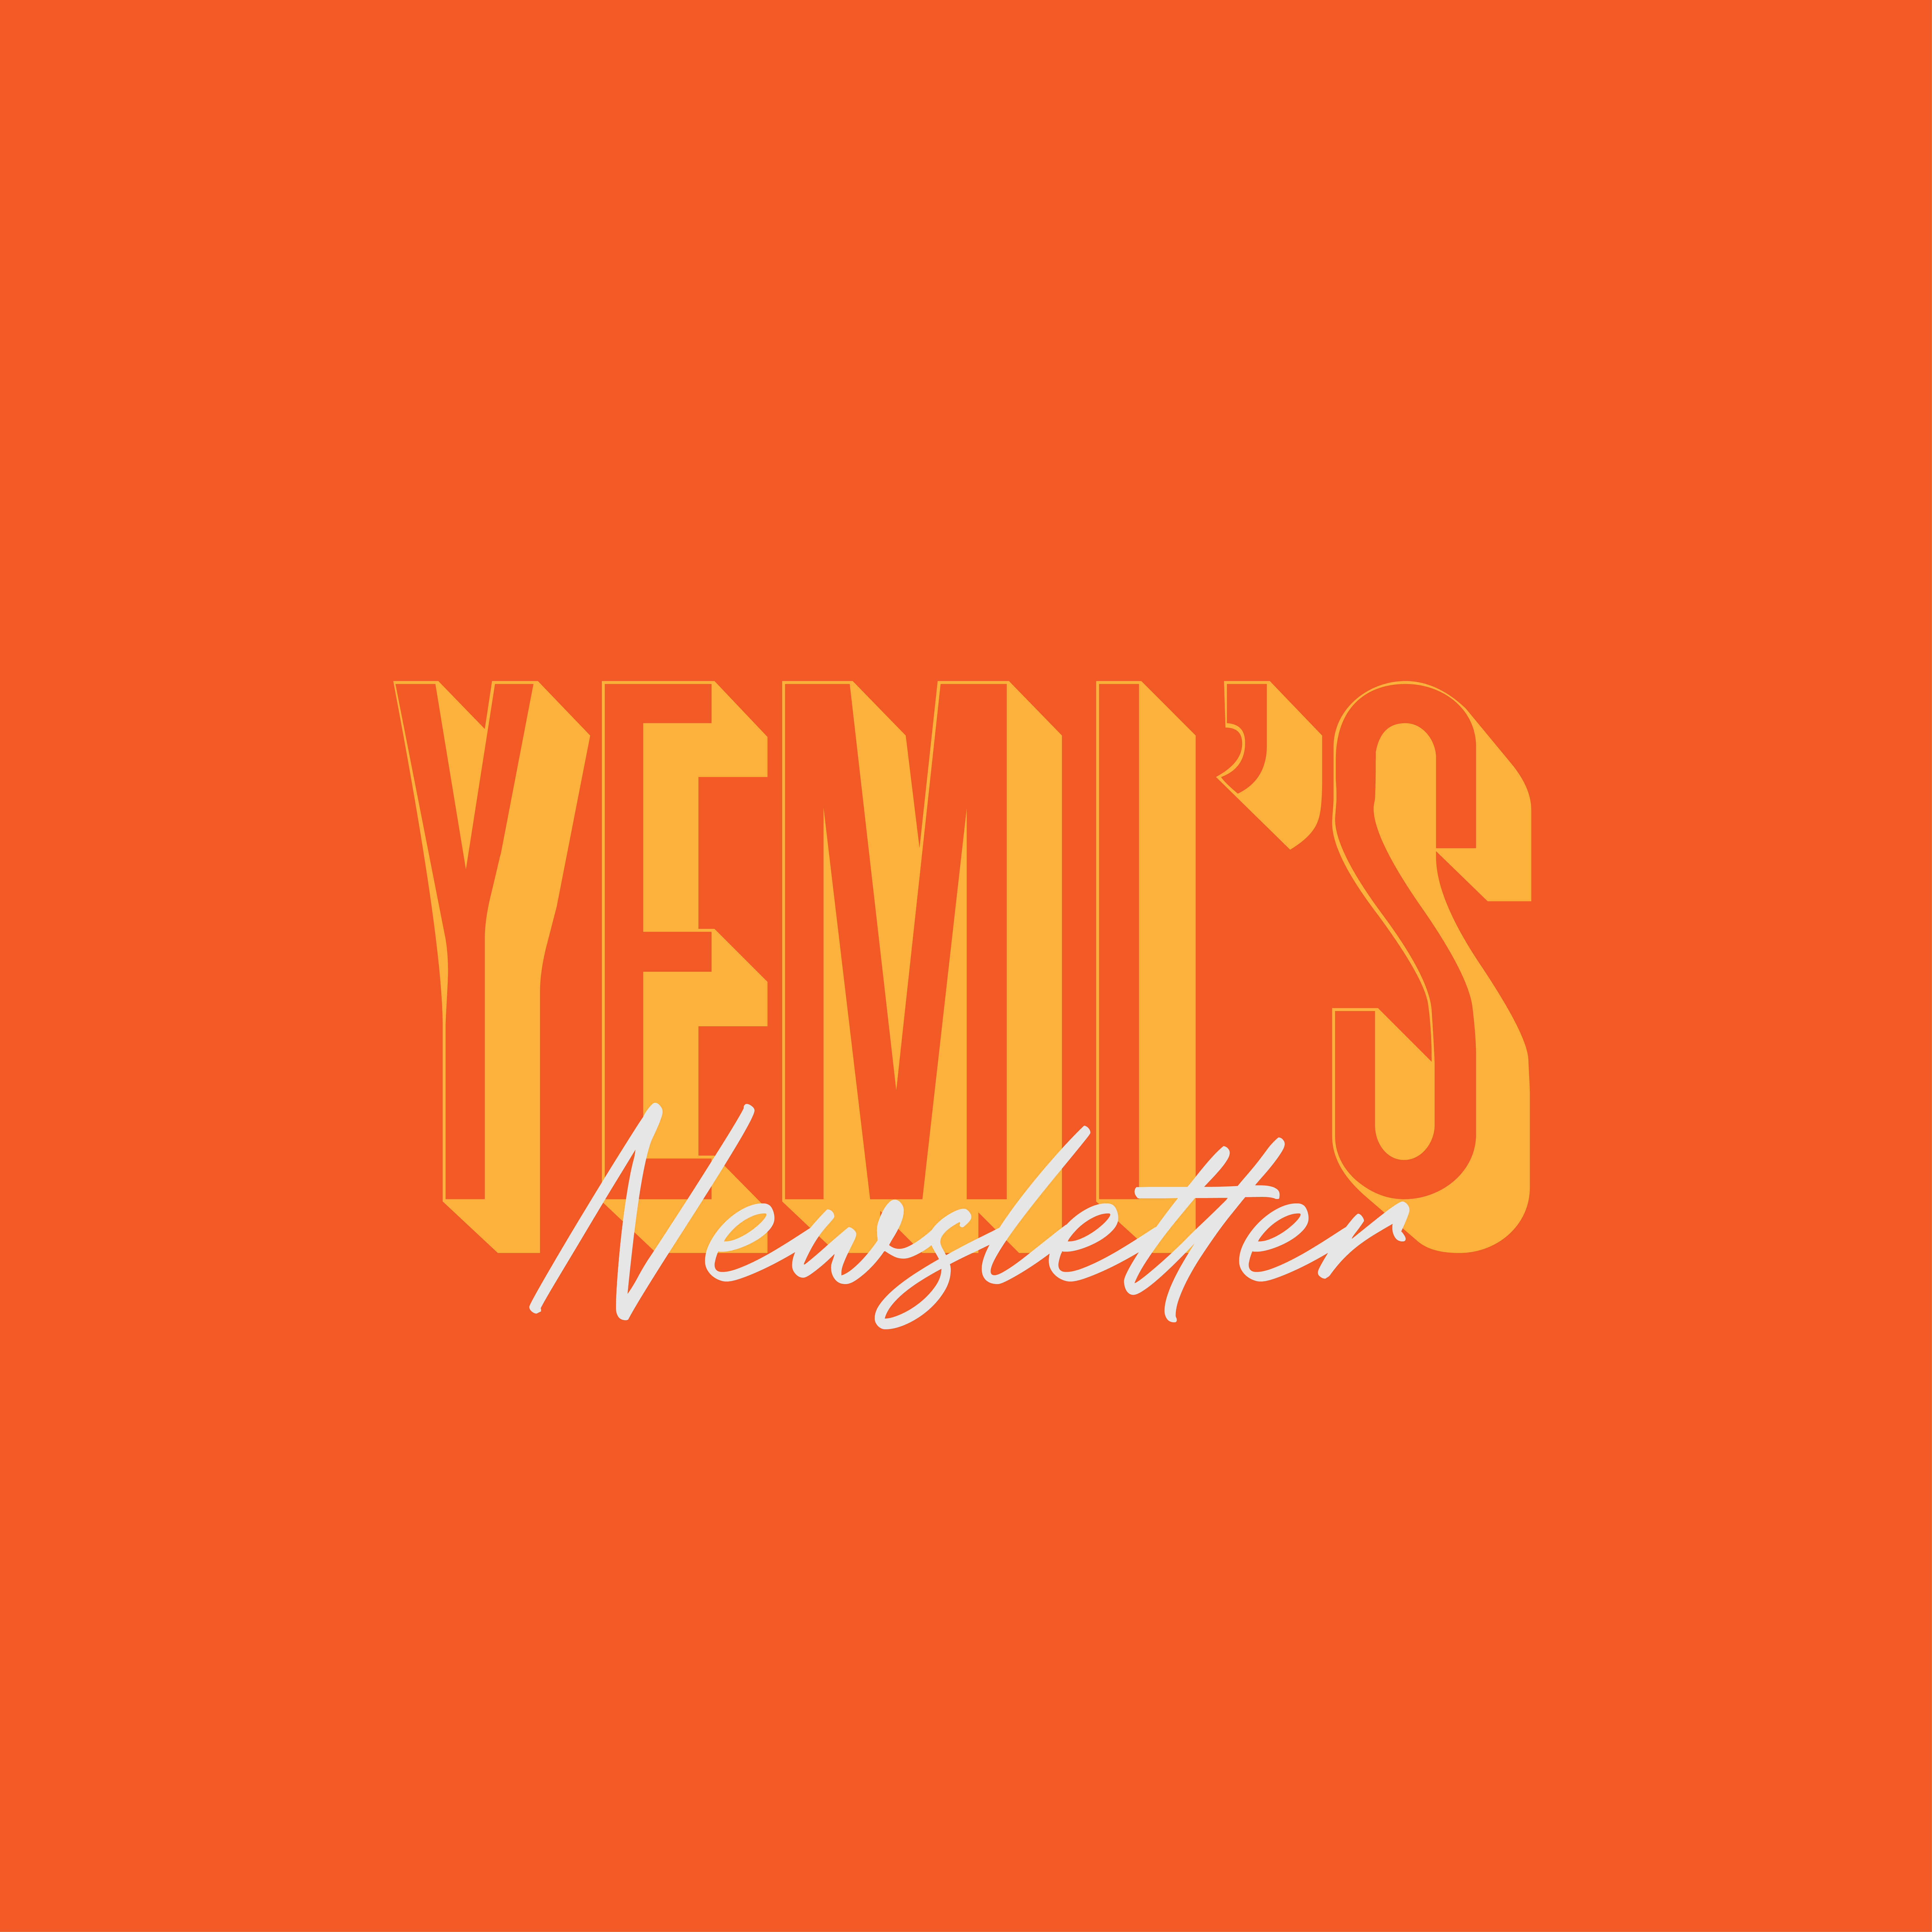 Yemi's Newsletter